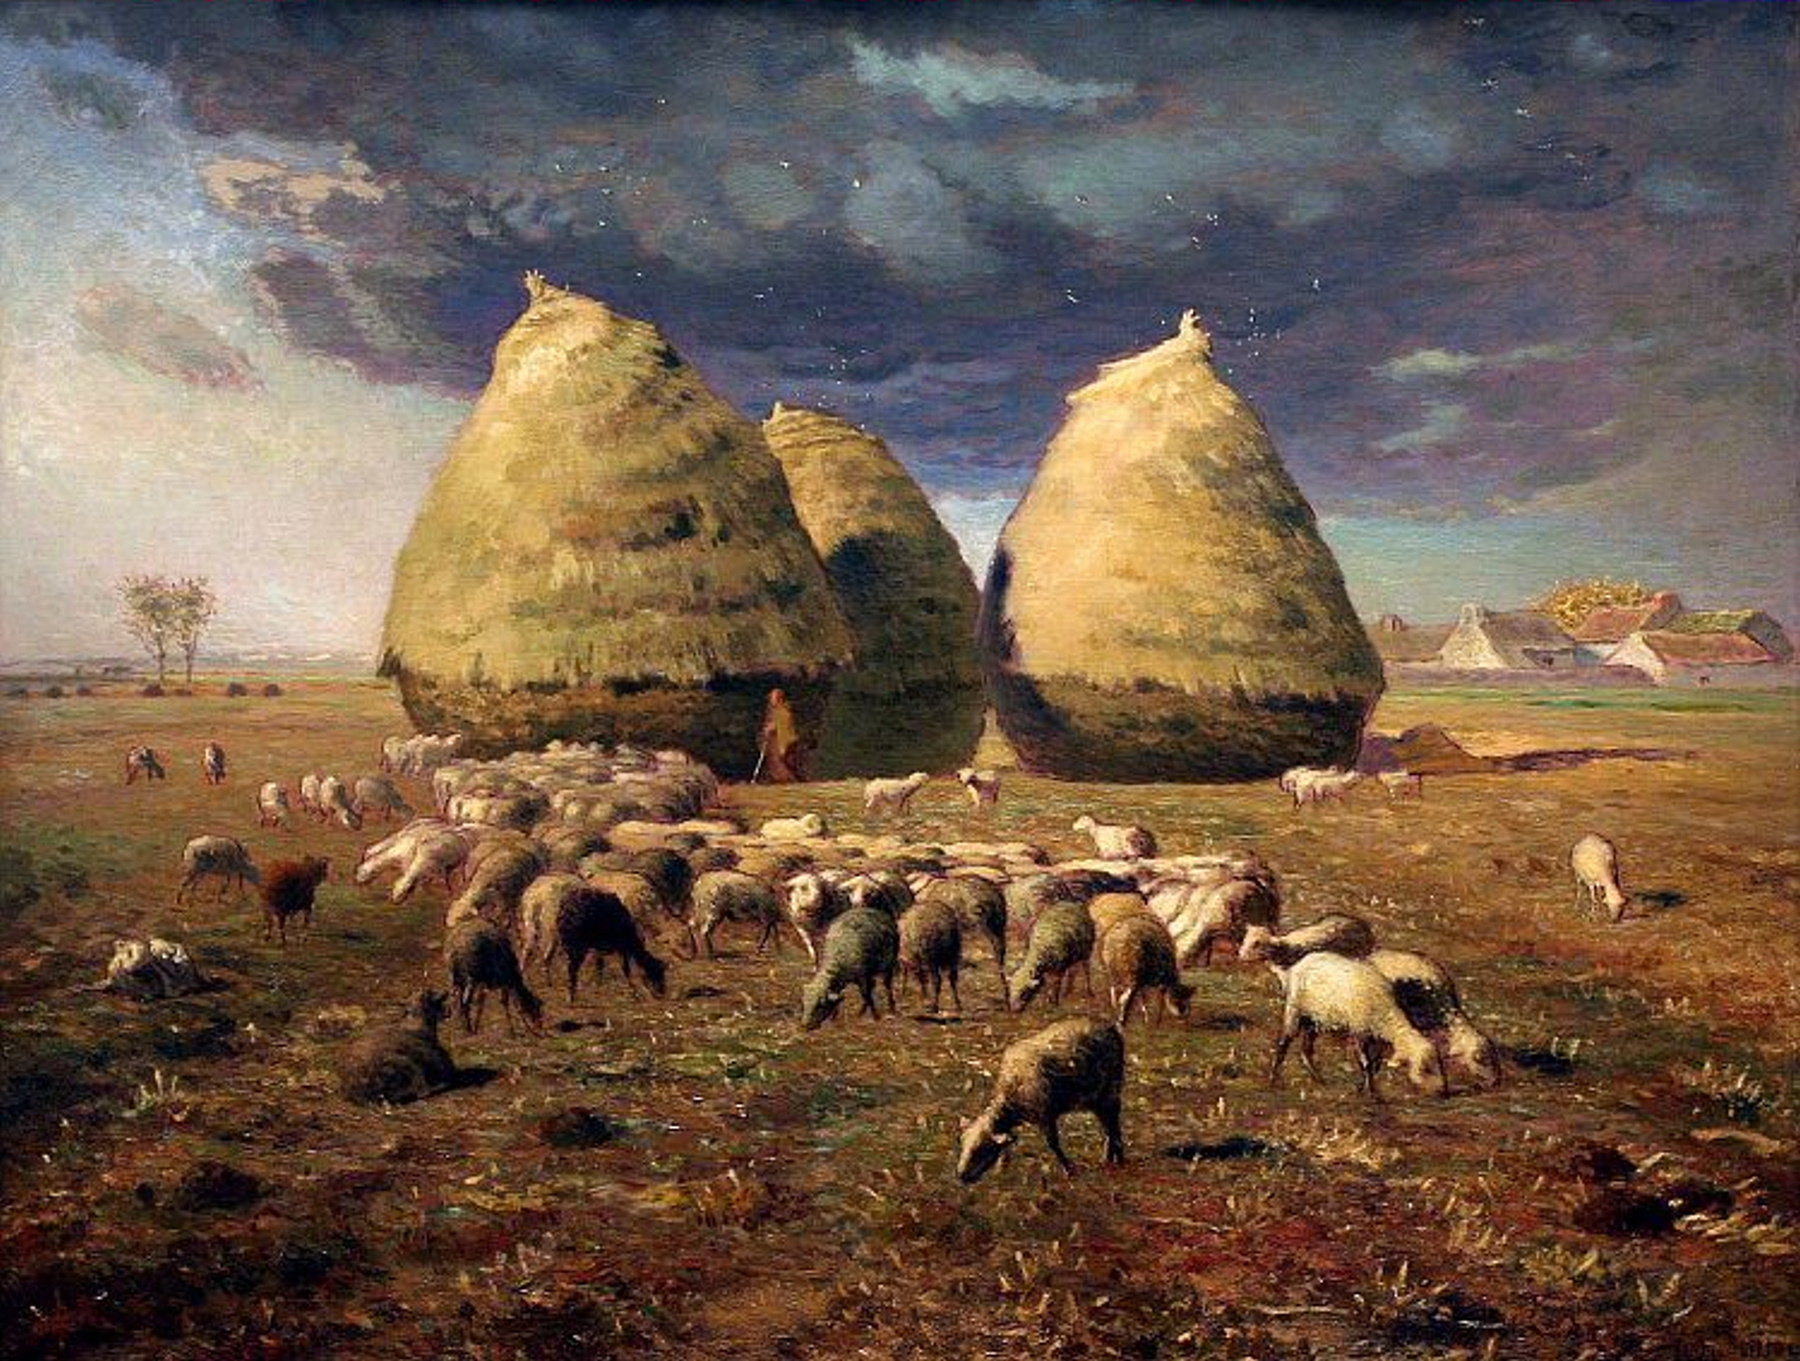 Pajares: Otoño by Jean-François Millet - c. 1874 - 85.1 x 110.2 cm Museo Metropolitano de Arte